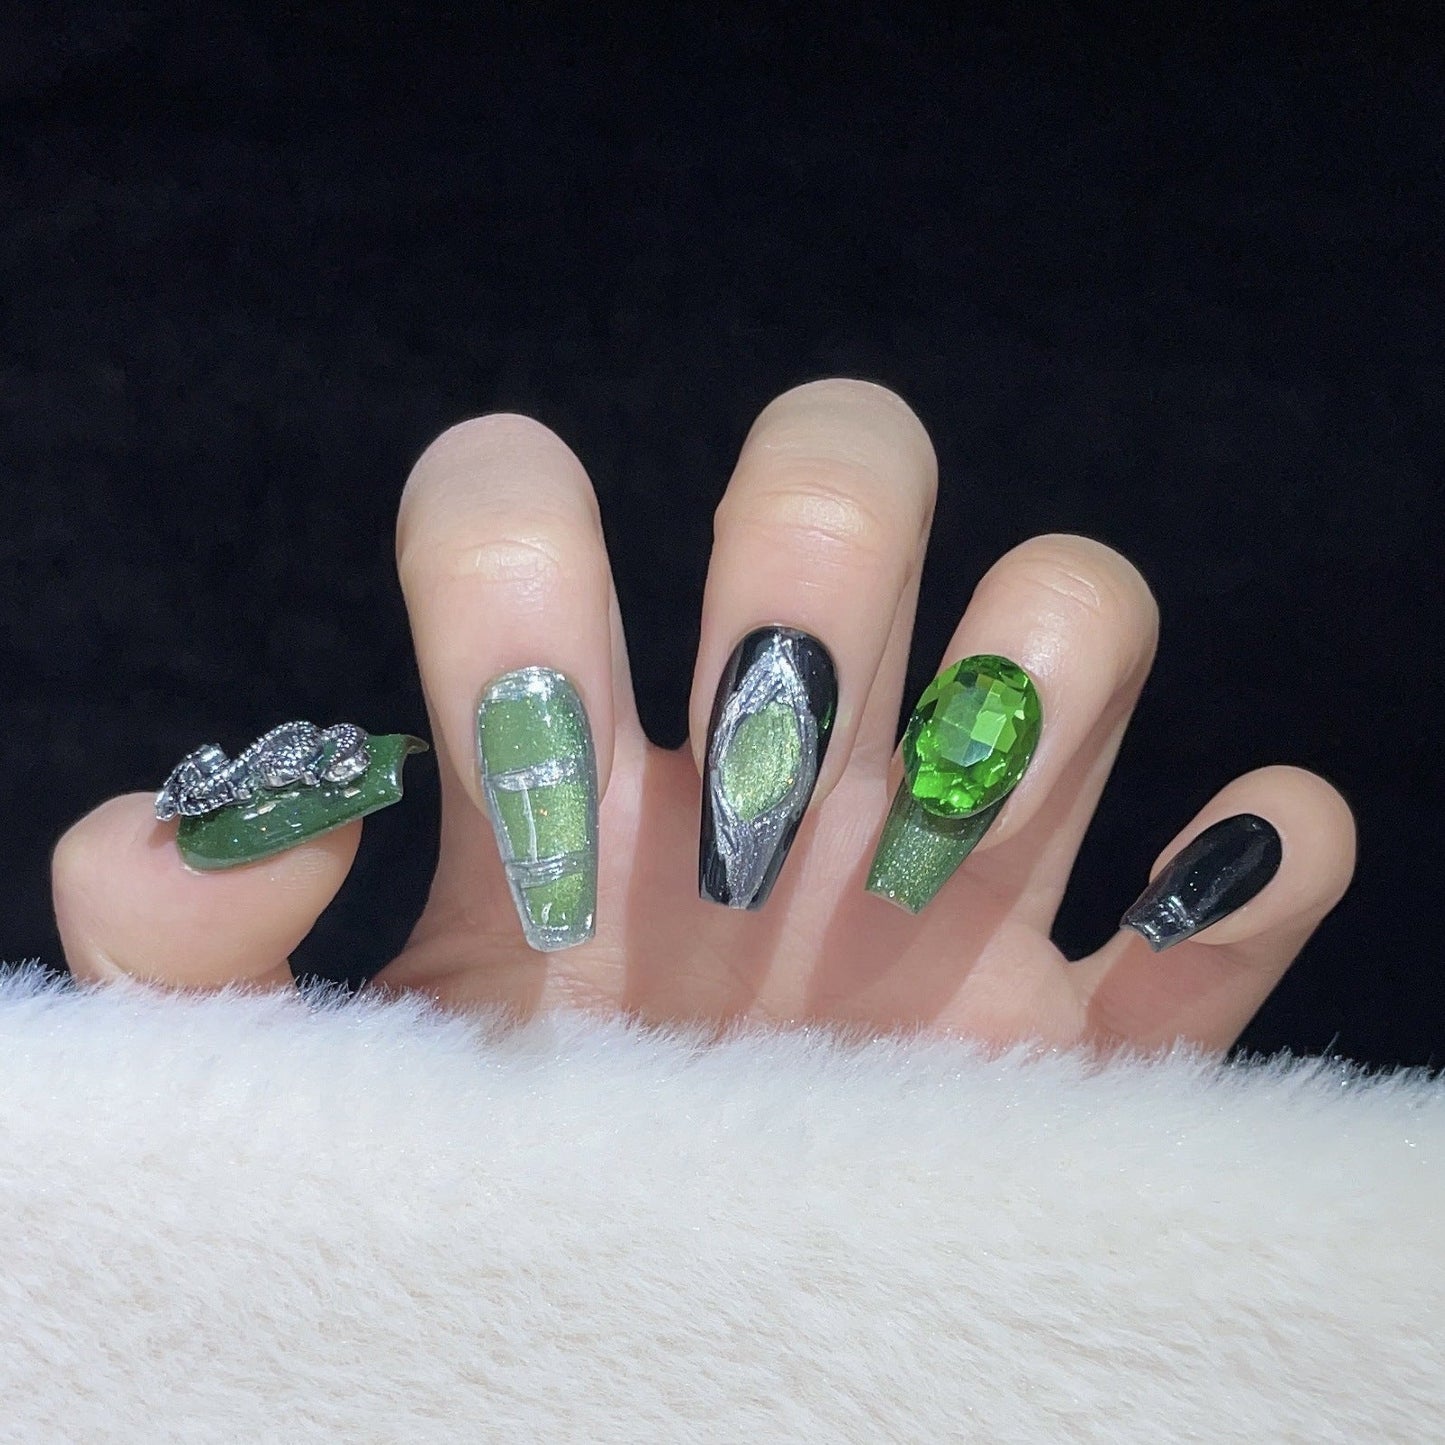 1291 Green Cat's Eye style press on nails 100% handmade false nails green